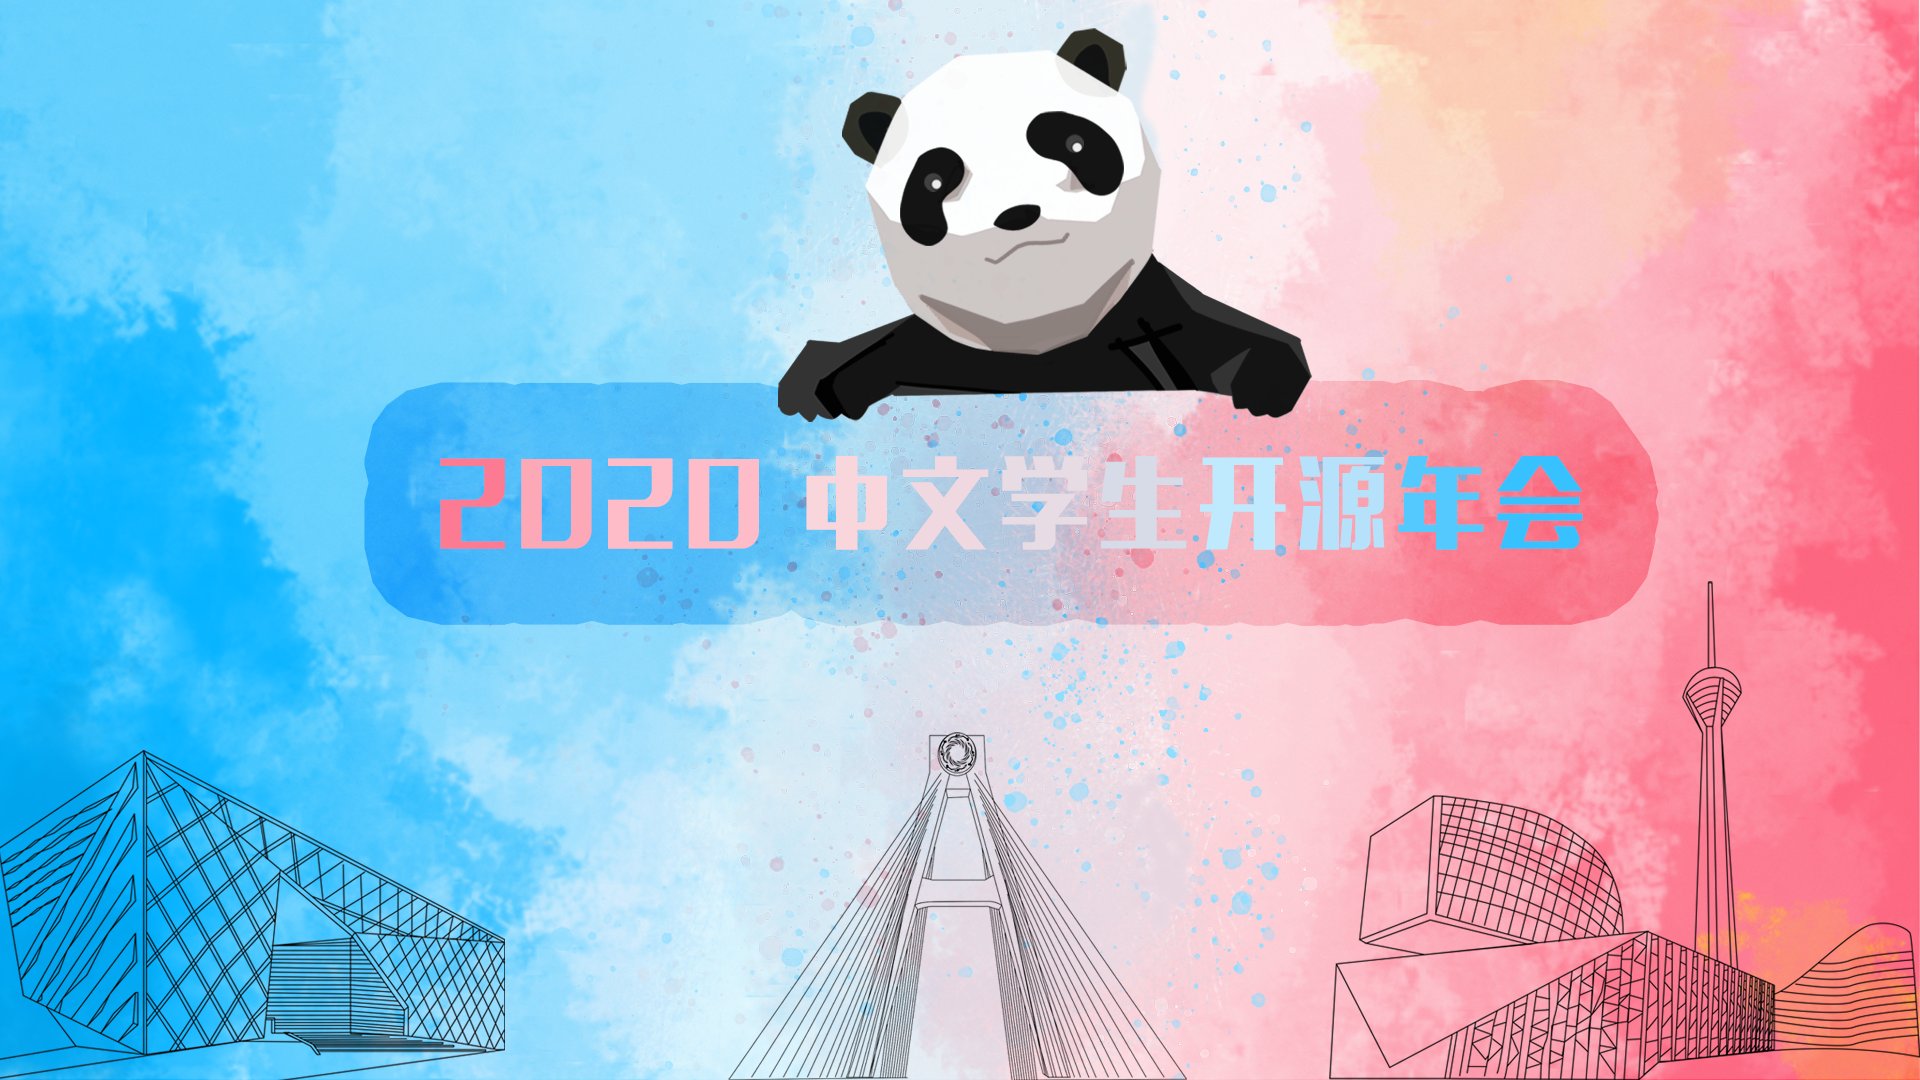 sosconf.zh 2020 第一届中文学生开源年会 5 月将在电子科技大学举办